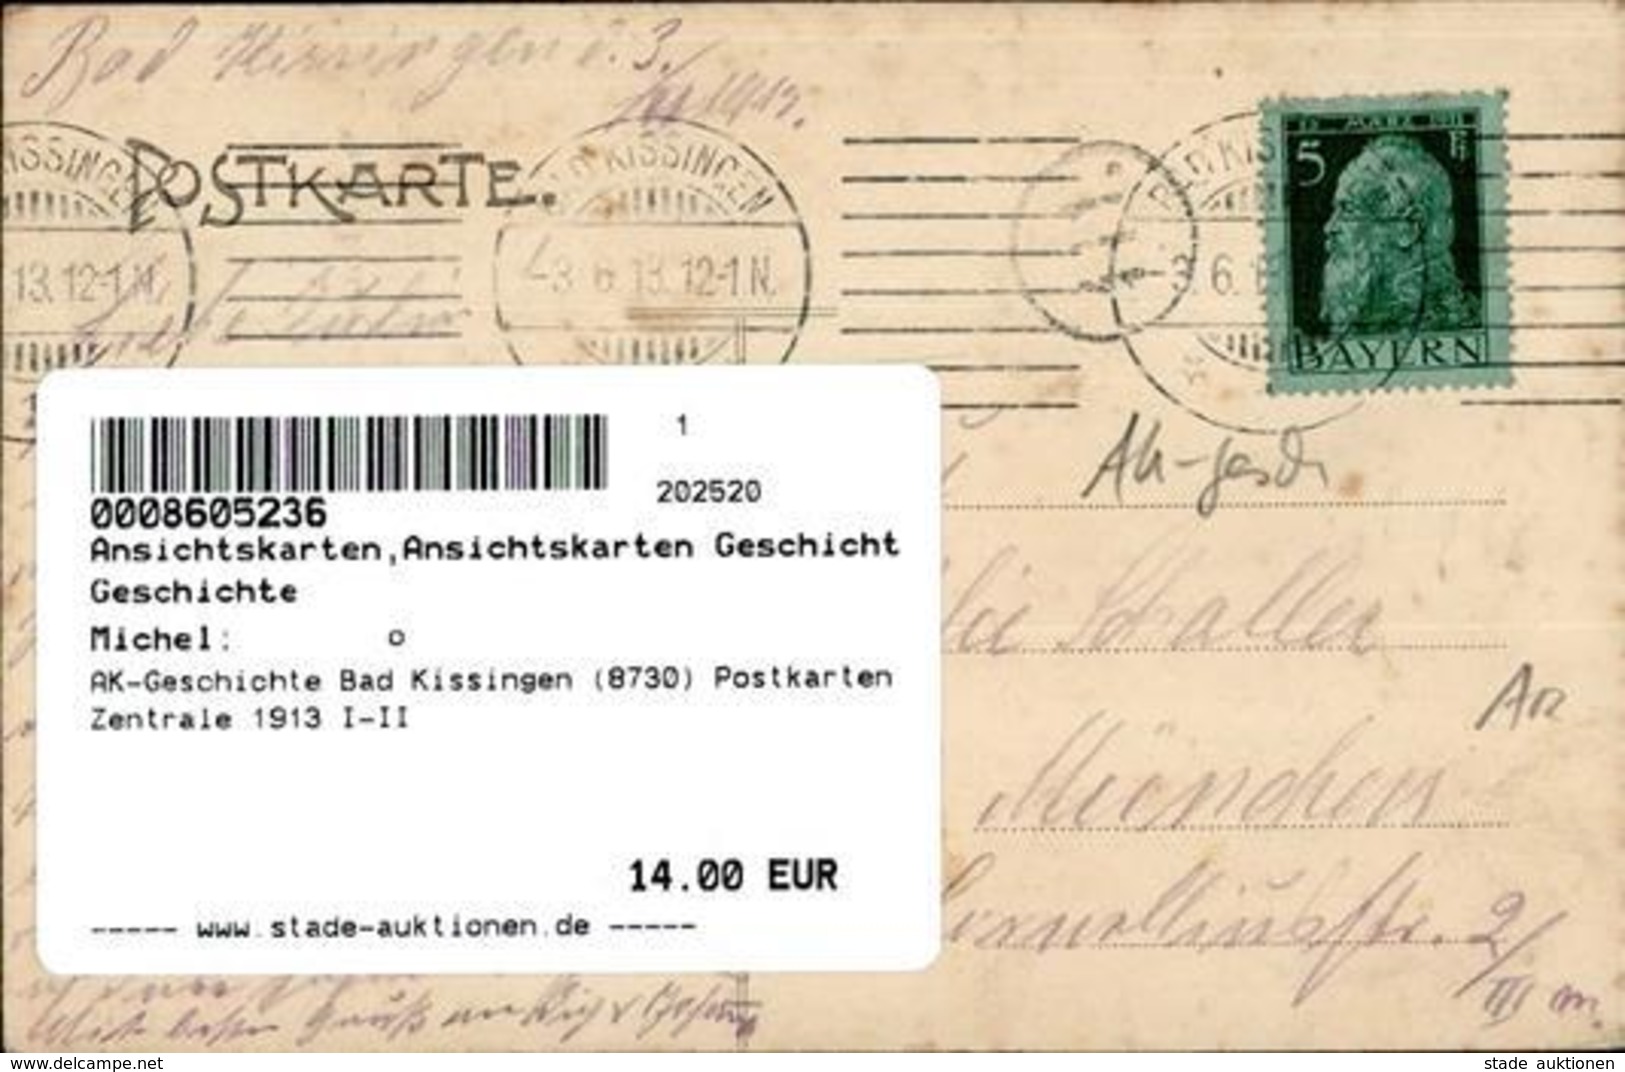 AK-Geschichte Bad Kissingen (8730) Postkarten Zentrale 1913 I-II - Historia